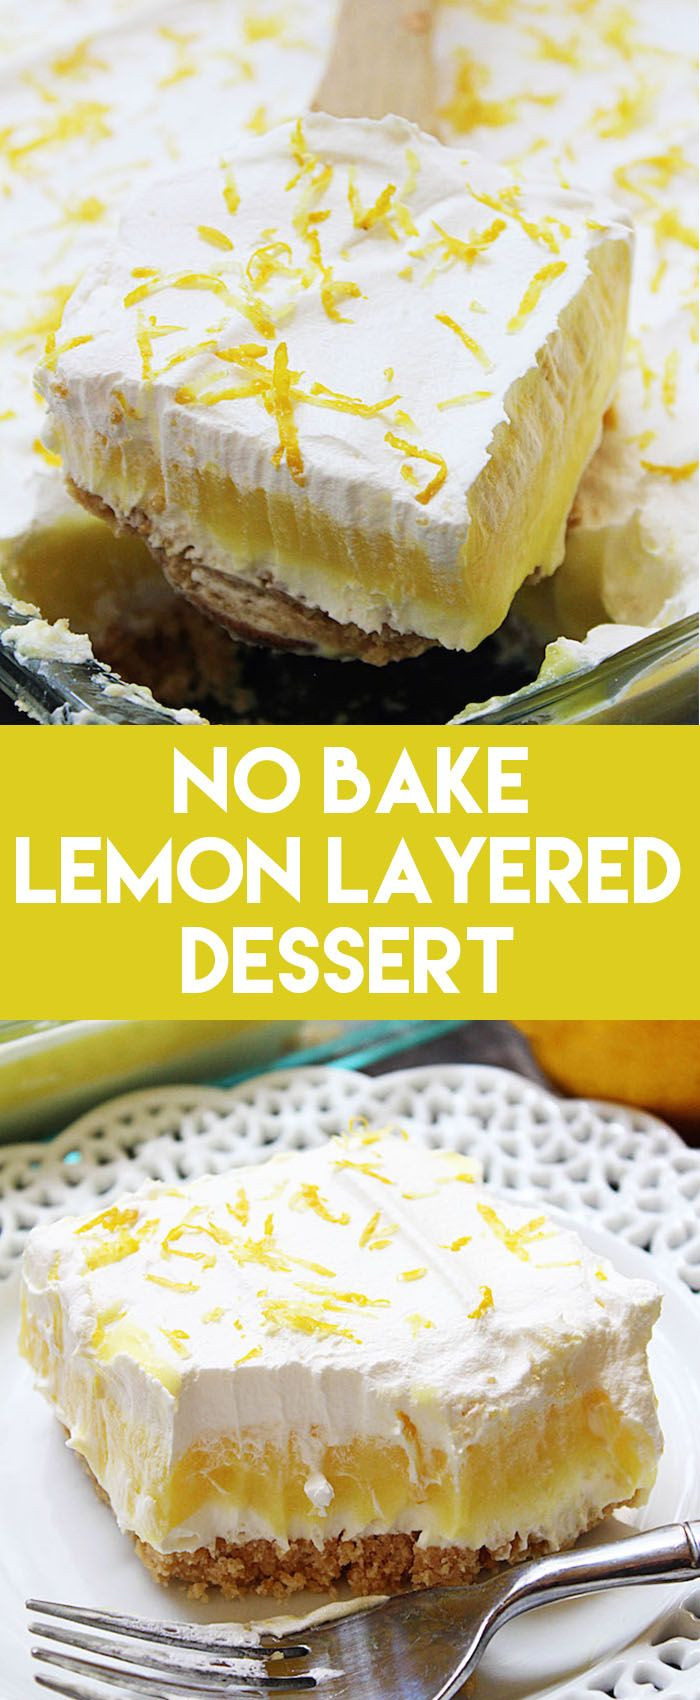 Healthy Lemon Desserts
 No Bake Lemon Layered Dessert Recipe